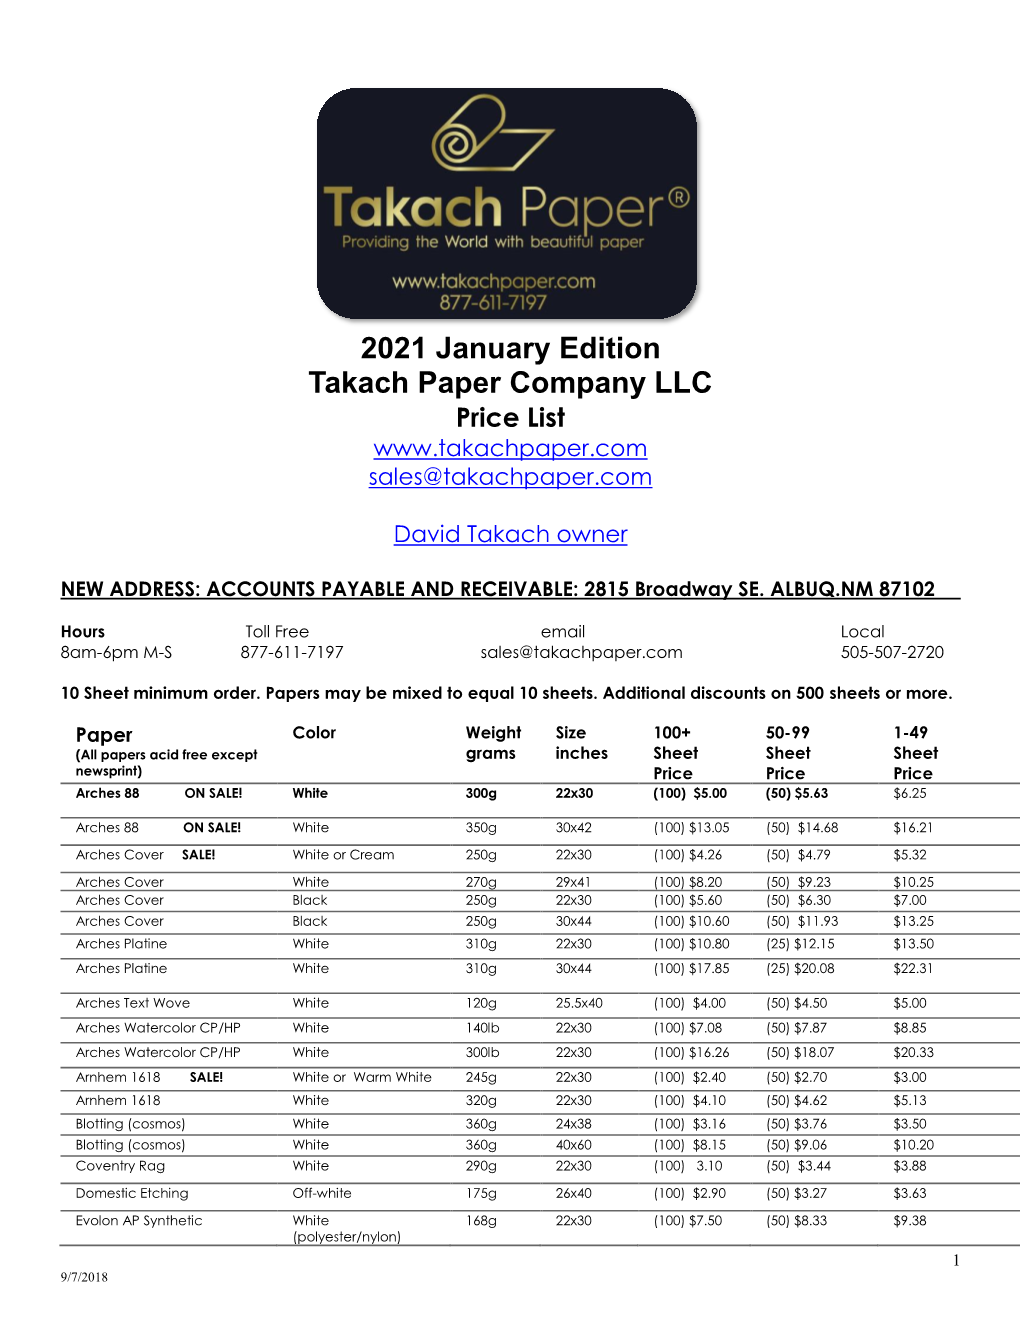 2021 January Edition Takach Paper Company LLC Price List Sales@Takachpaper.Com